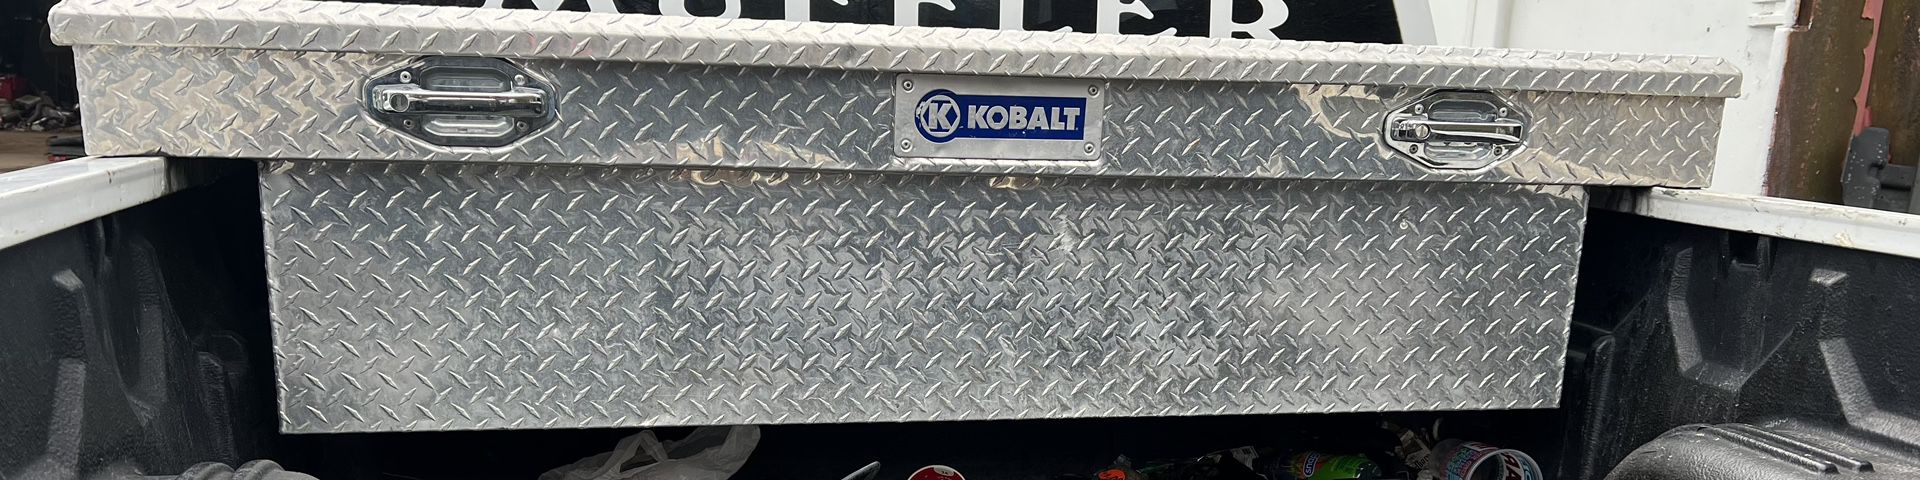 Kobalt mini Toolbox - Black for Sale in Chesapeake, VA - OfferUp